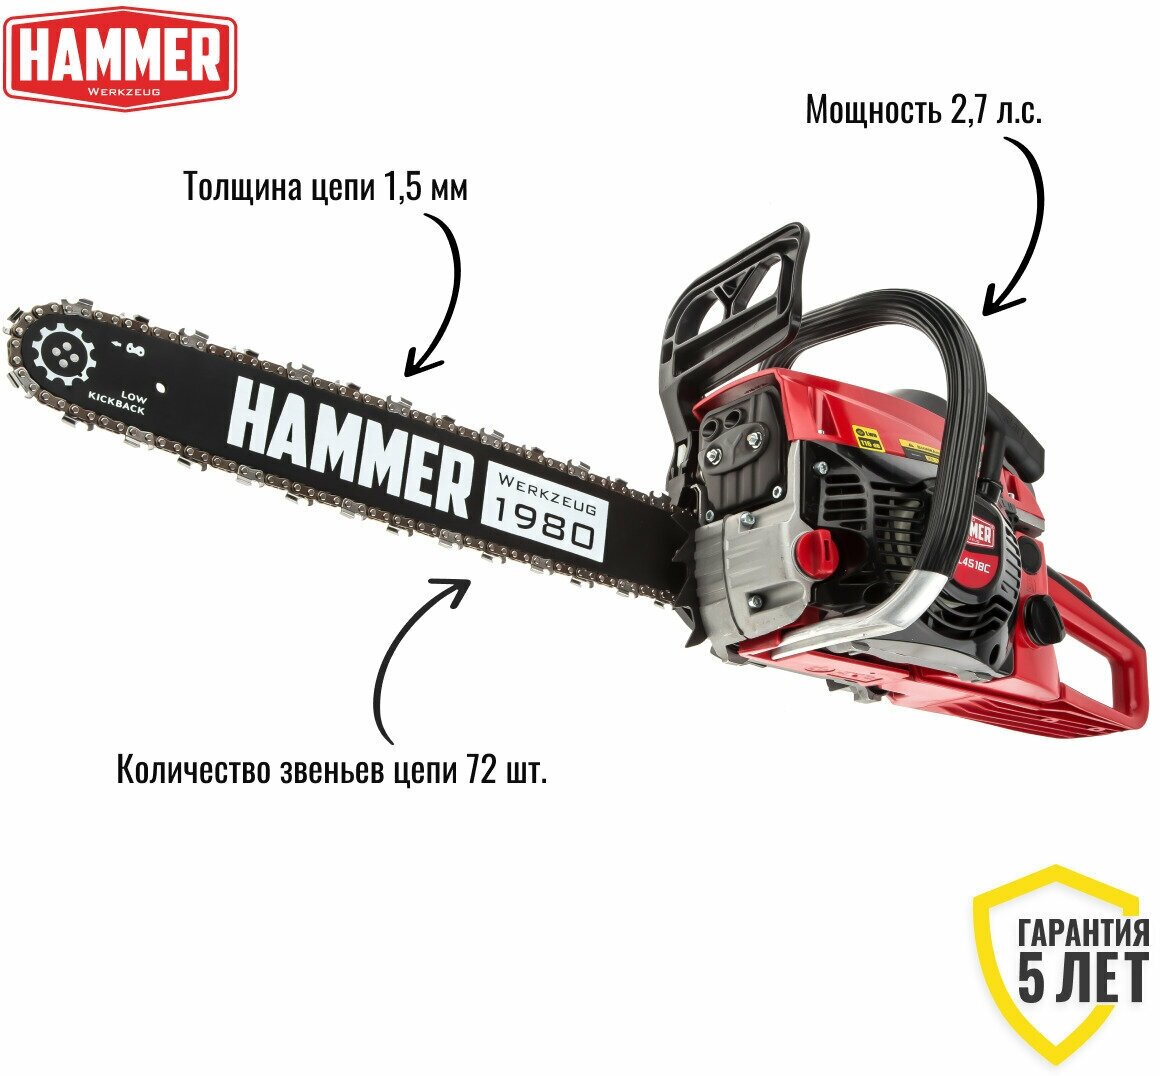 Бензопила Hammer BPL4518C 2кВт/2,7лс 45см3 шина 18" цепь 0,325"-1,5мм-72 6кг